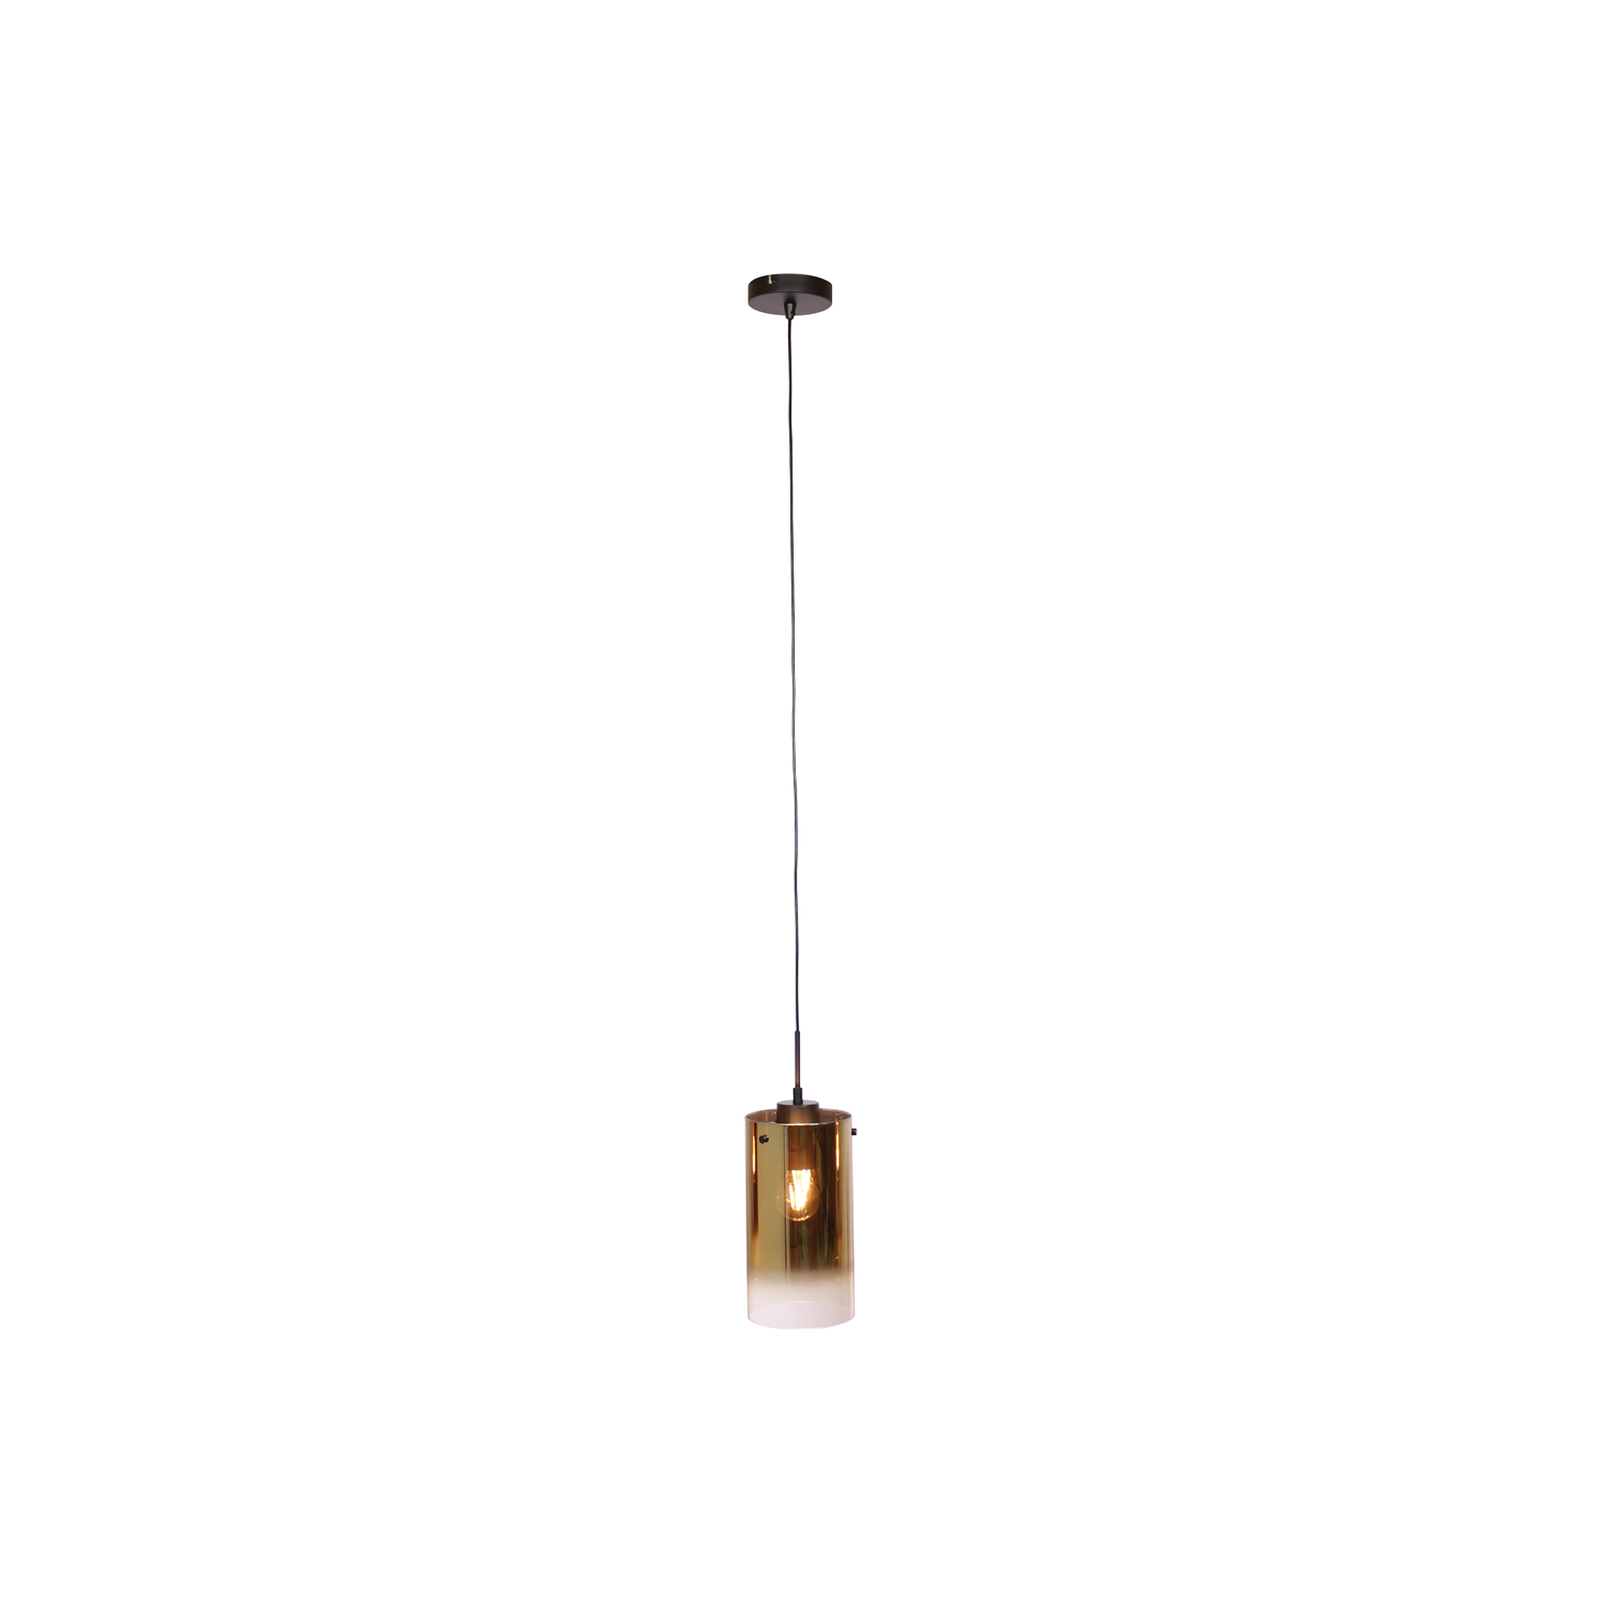 Ventotto hanglamp, zwart/goud, Ø 15 cm, glas